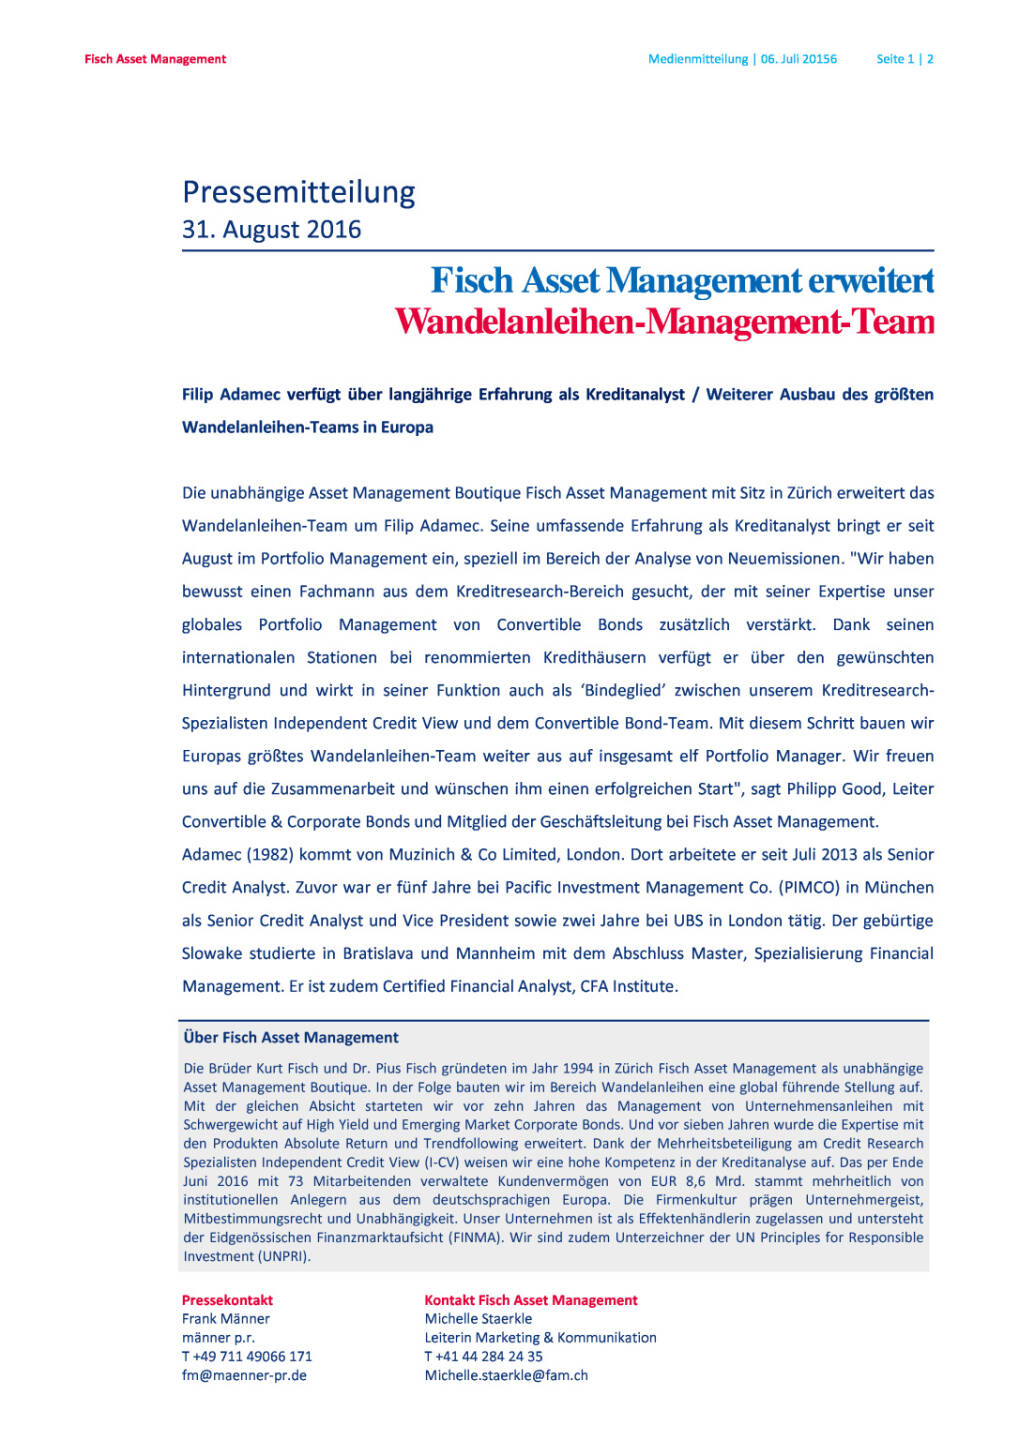 Fisch Asset Management erweitert Wandelanleihen-Management-Team, Seite 1/2, komplettes Dokument unter http://boerse-social.com/static/uploads/file_1692_fisch_asset_management_erweitert_wandelanleihen-management-team.pdf